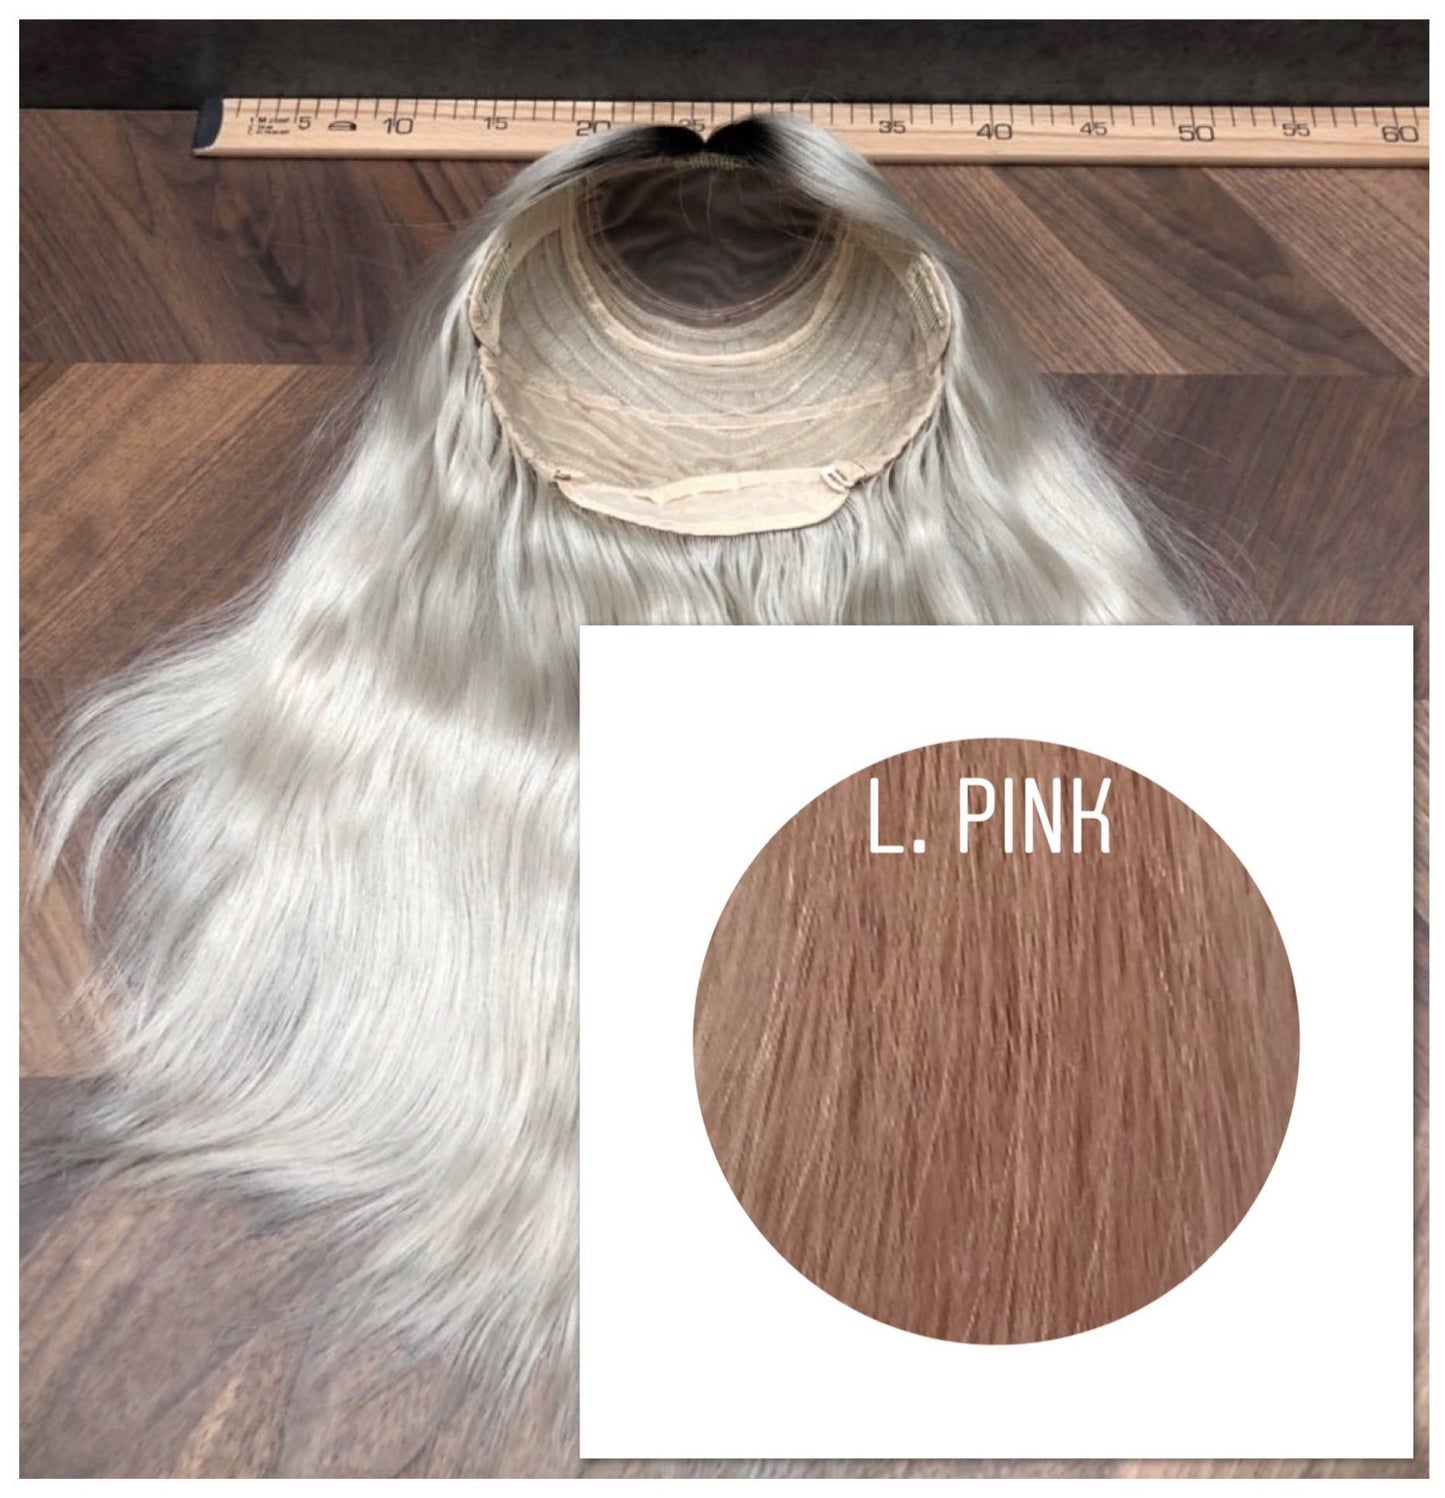 Wigs Color L.Pink GVA hair_Retail price - GVA hair